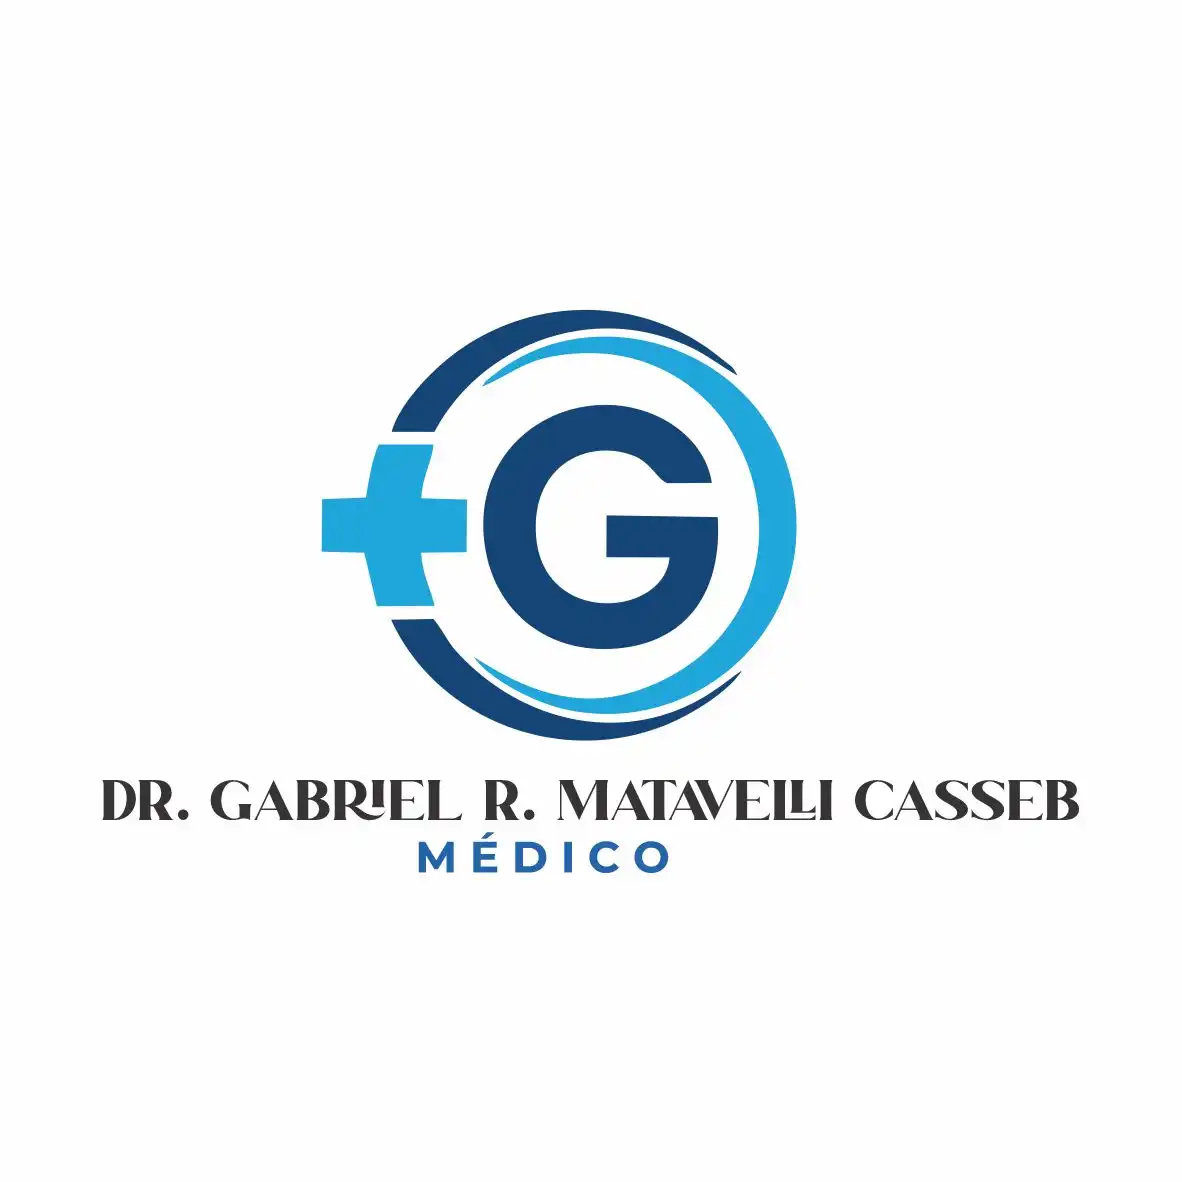 
Logotipo Logomarca Médico Clínico



